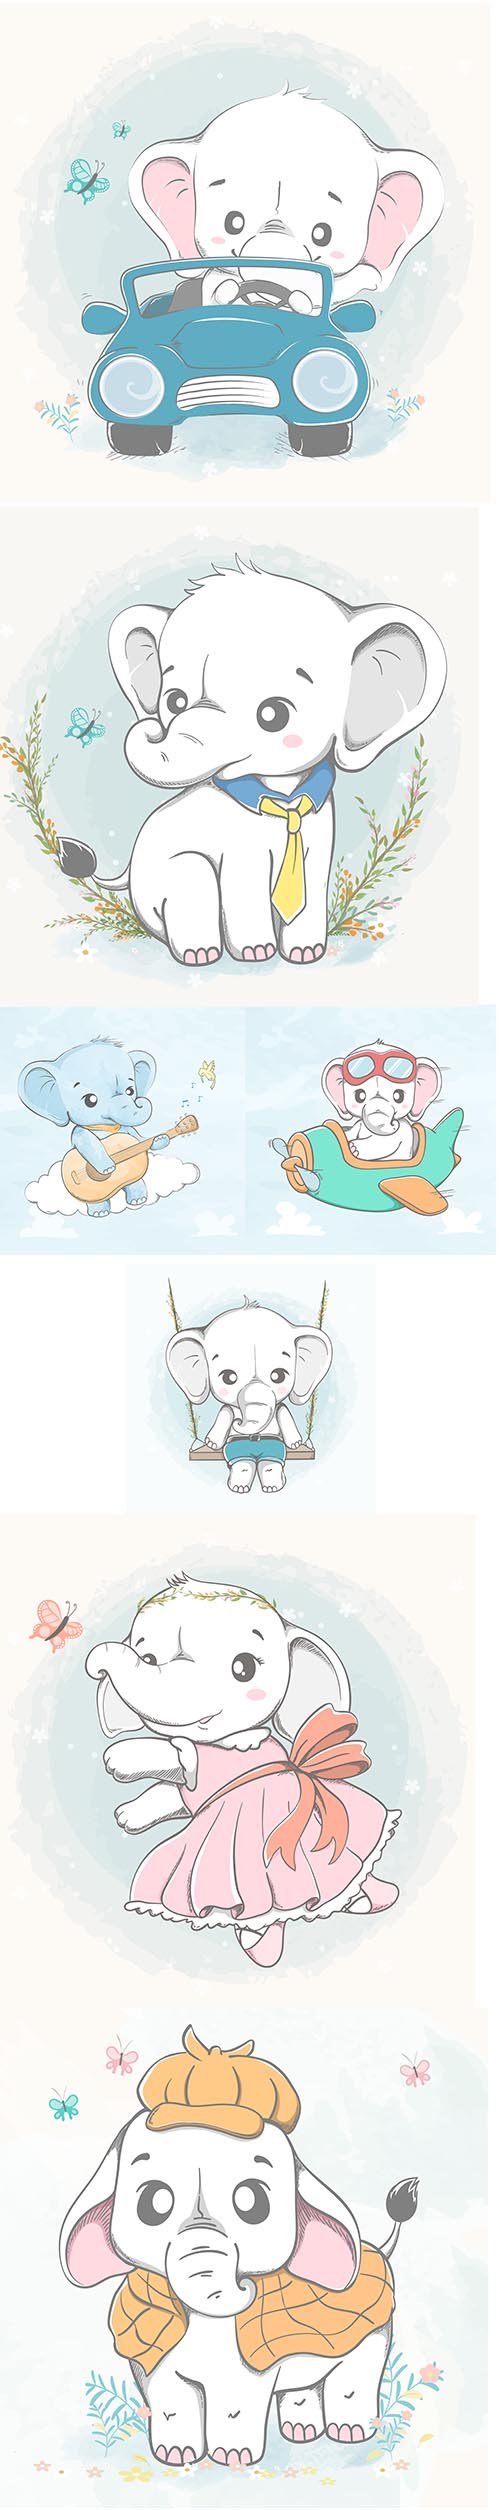 Cute elephant cartoon hand drawn illustration